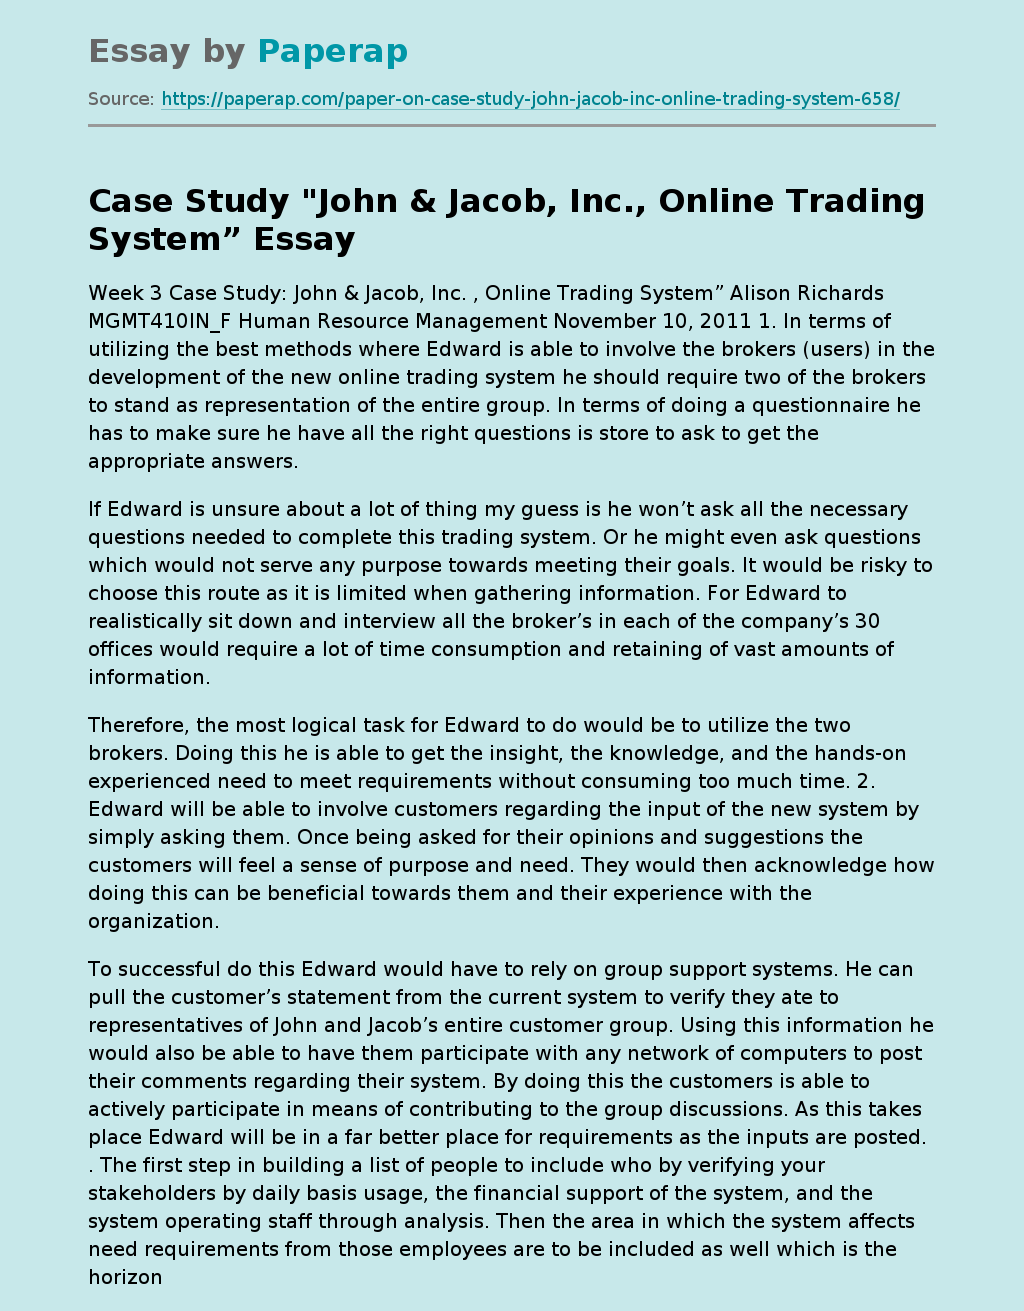 Case Study "John & Jacob, Inc., Online Trading System”